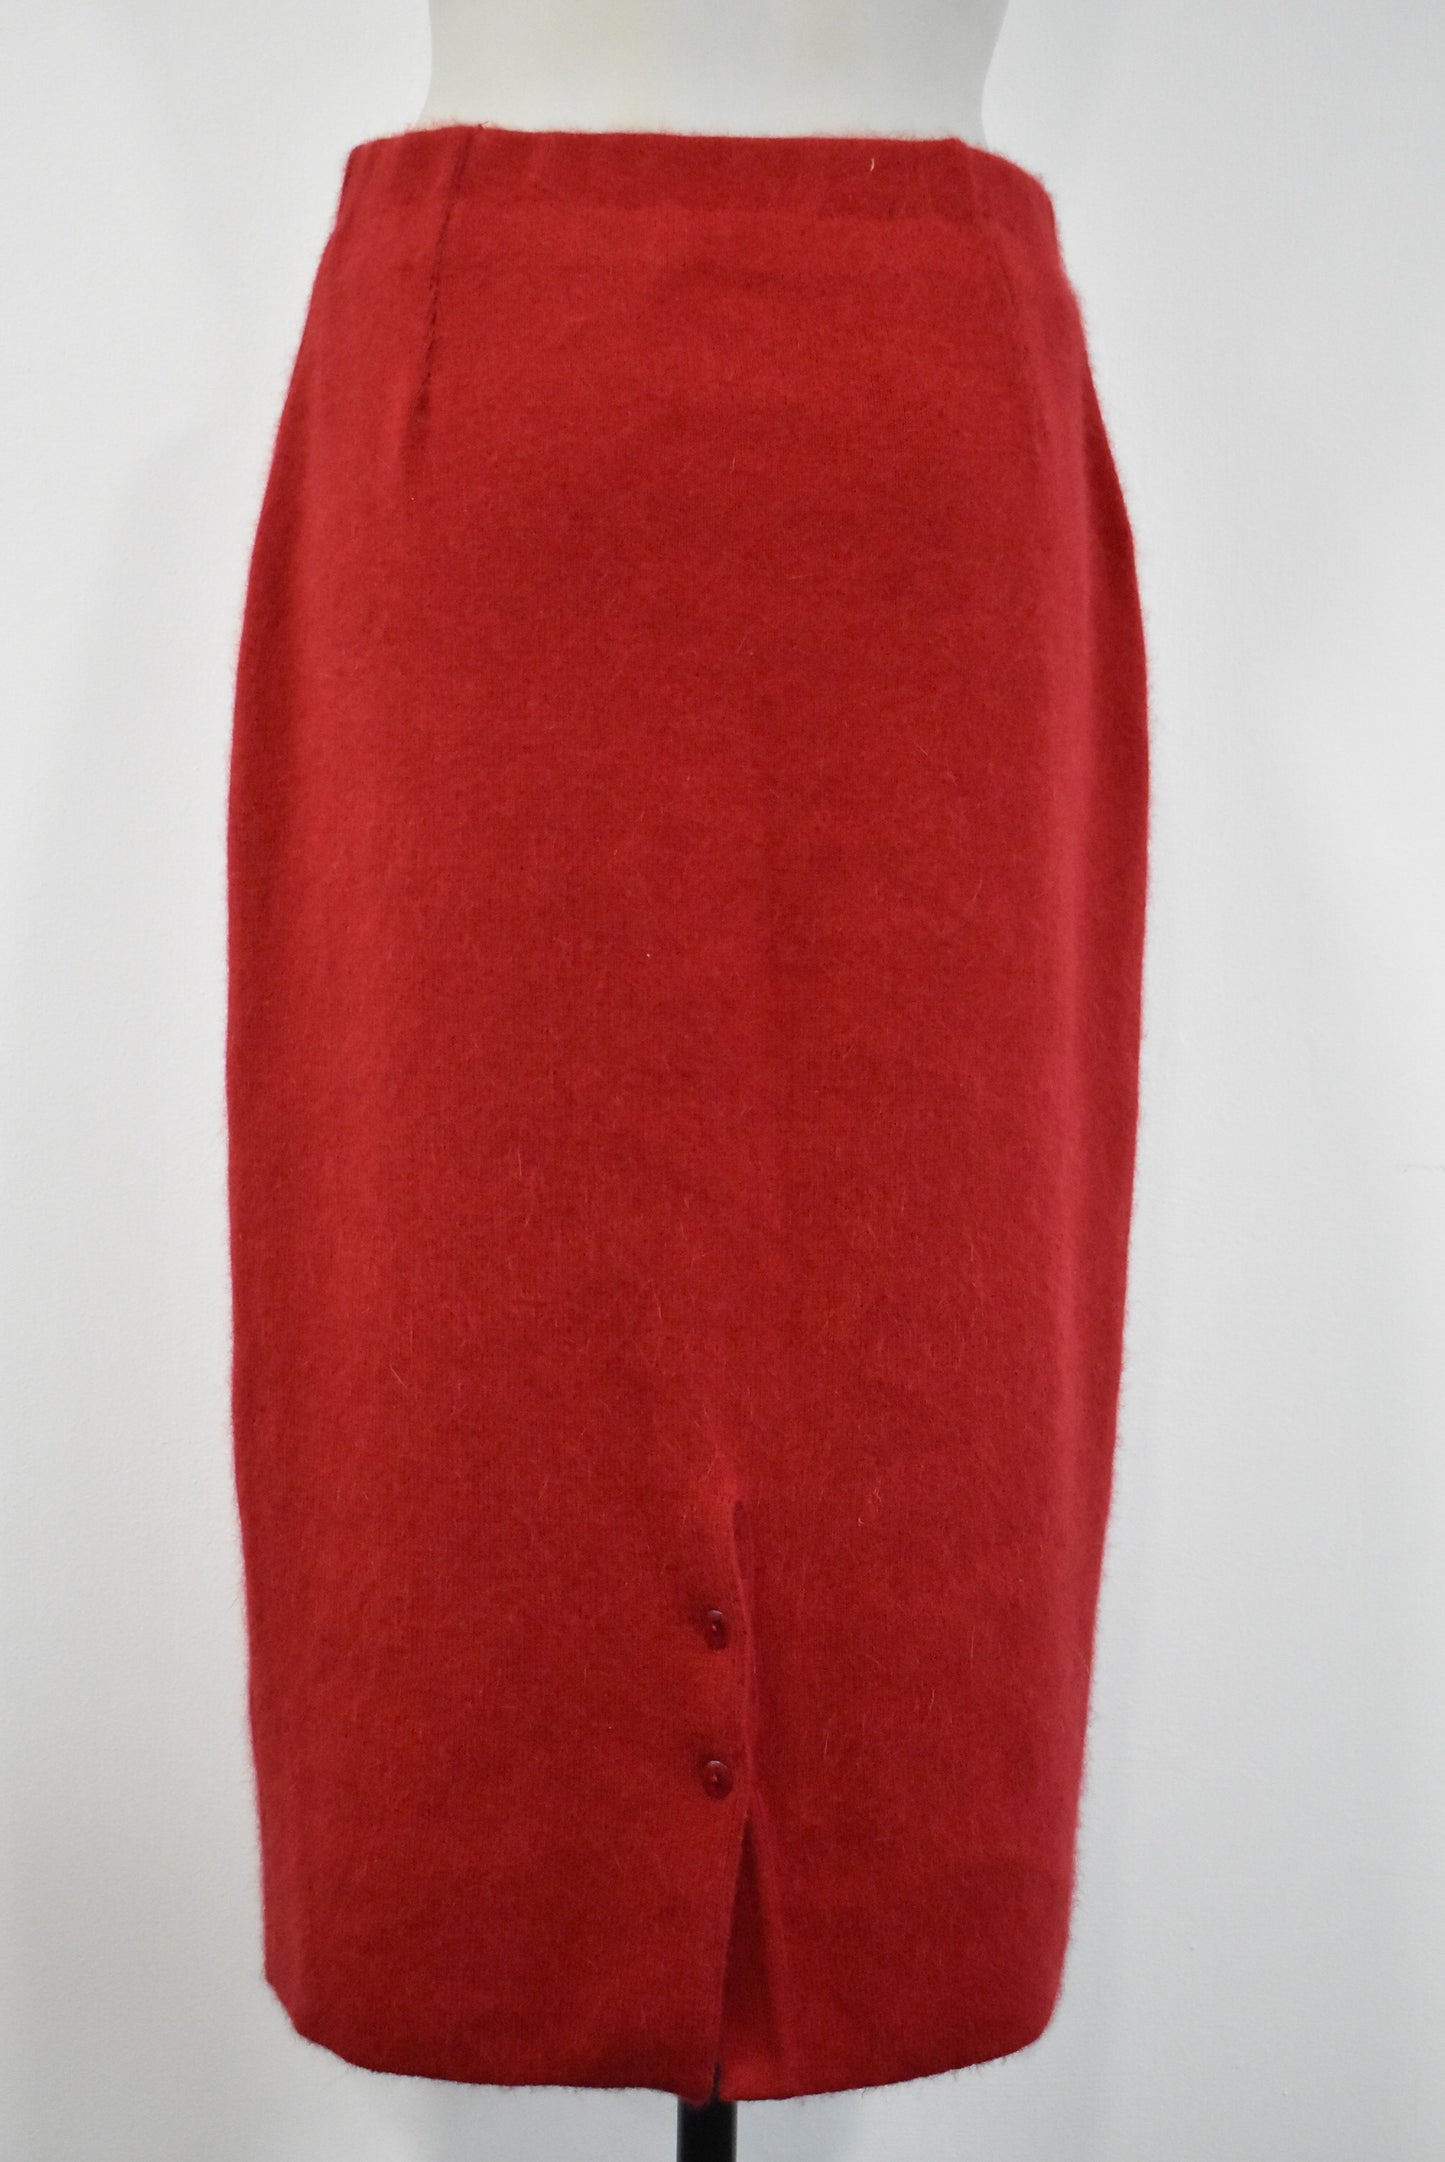 Glengyle NZ made long red angora blend skirt, M